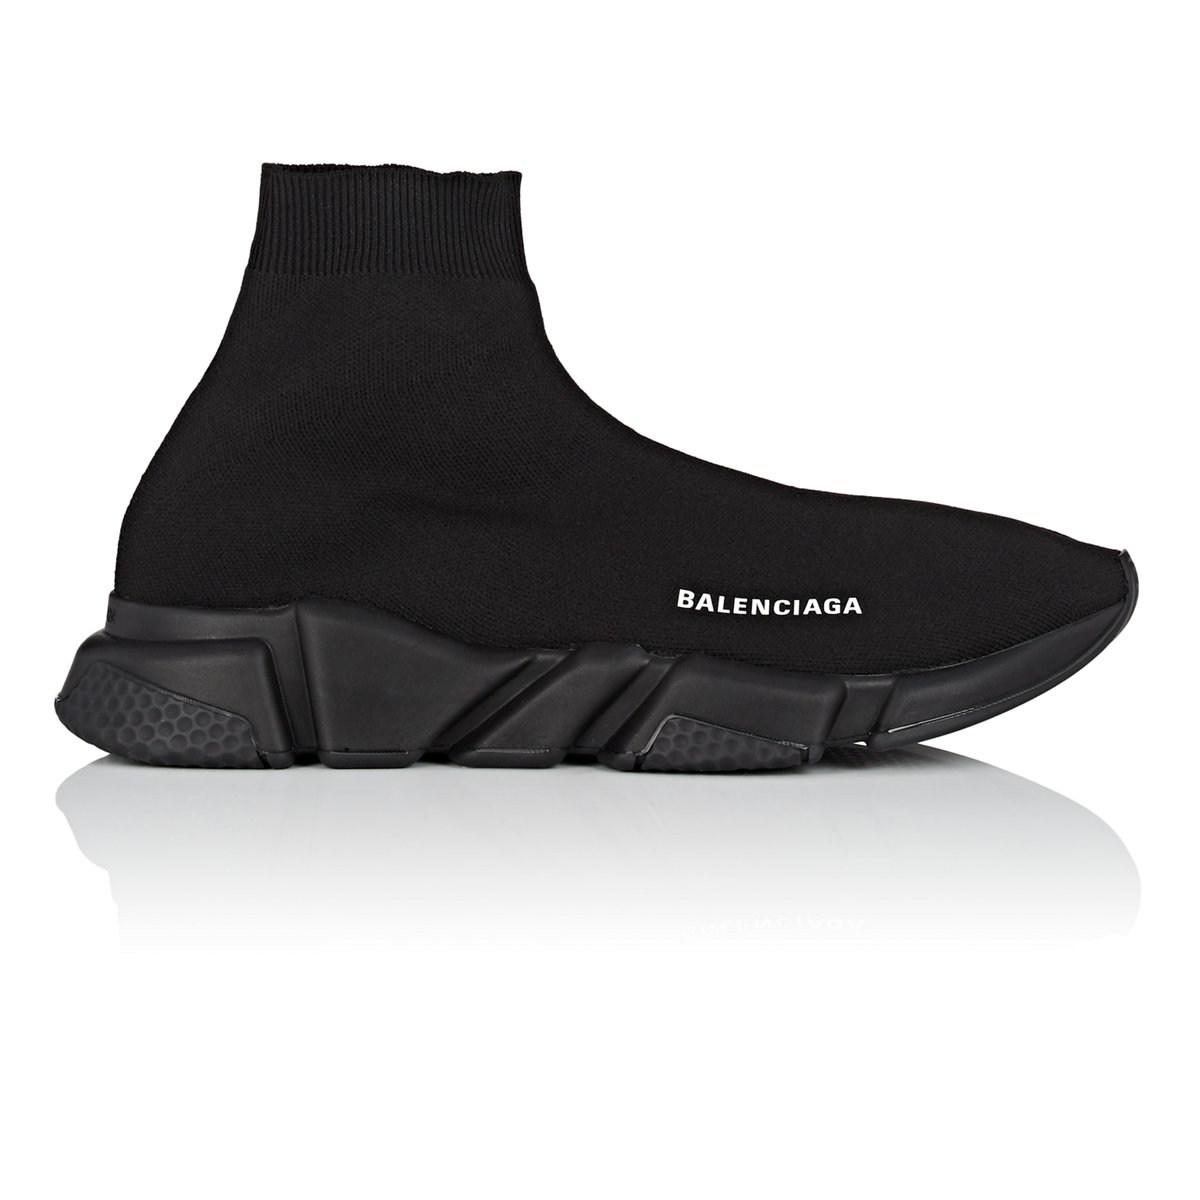 Balenciaga Speed Knit Sneakers in Black for Men - Lyst